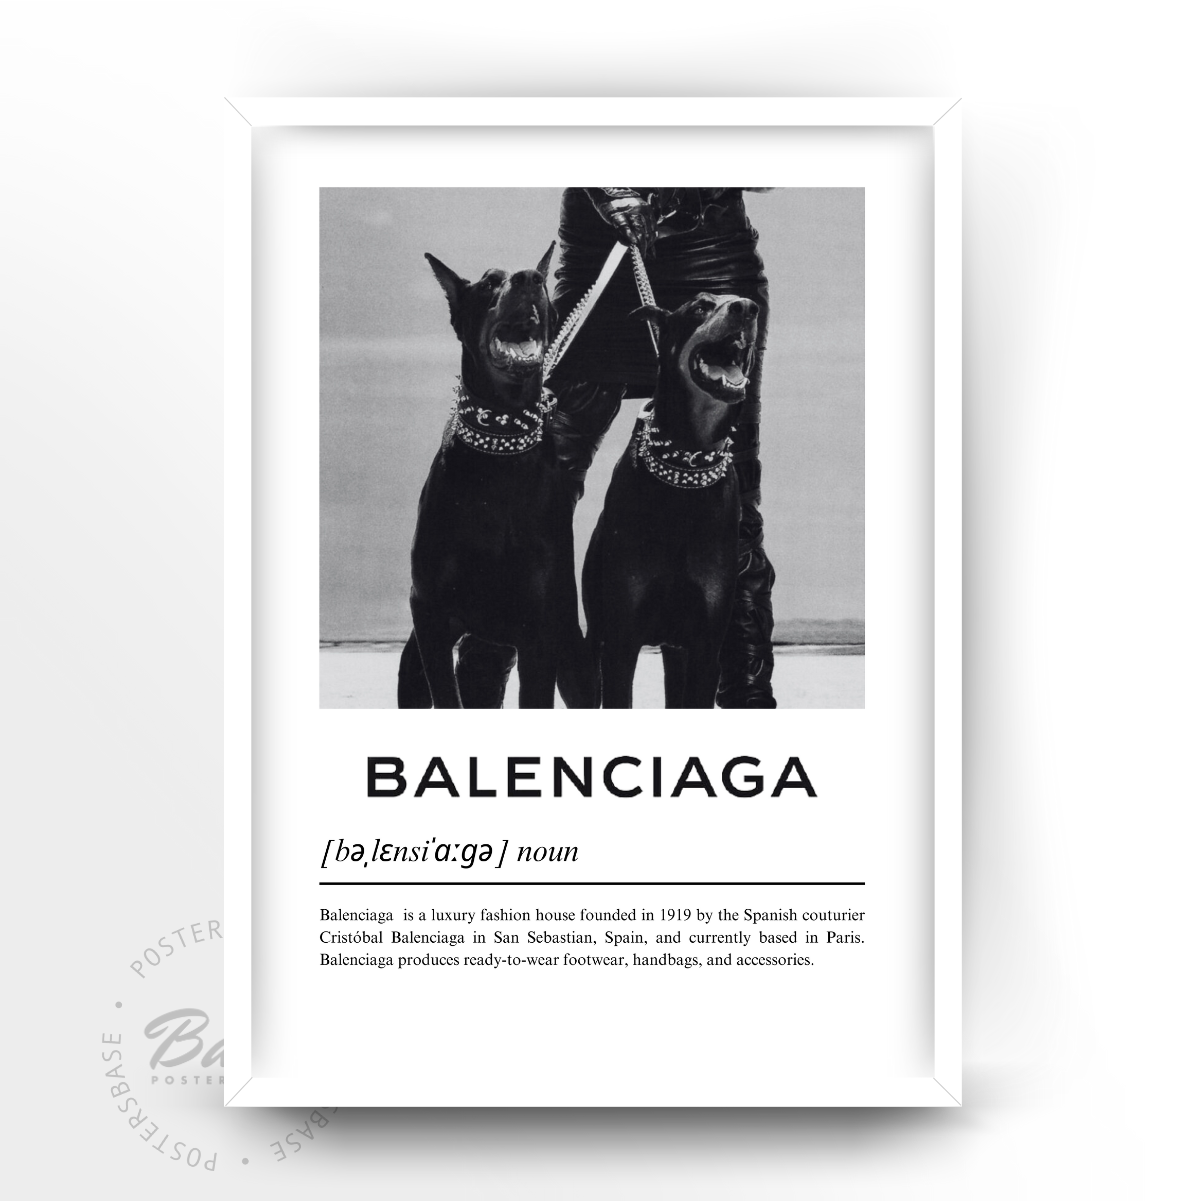 Balenciaga History